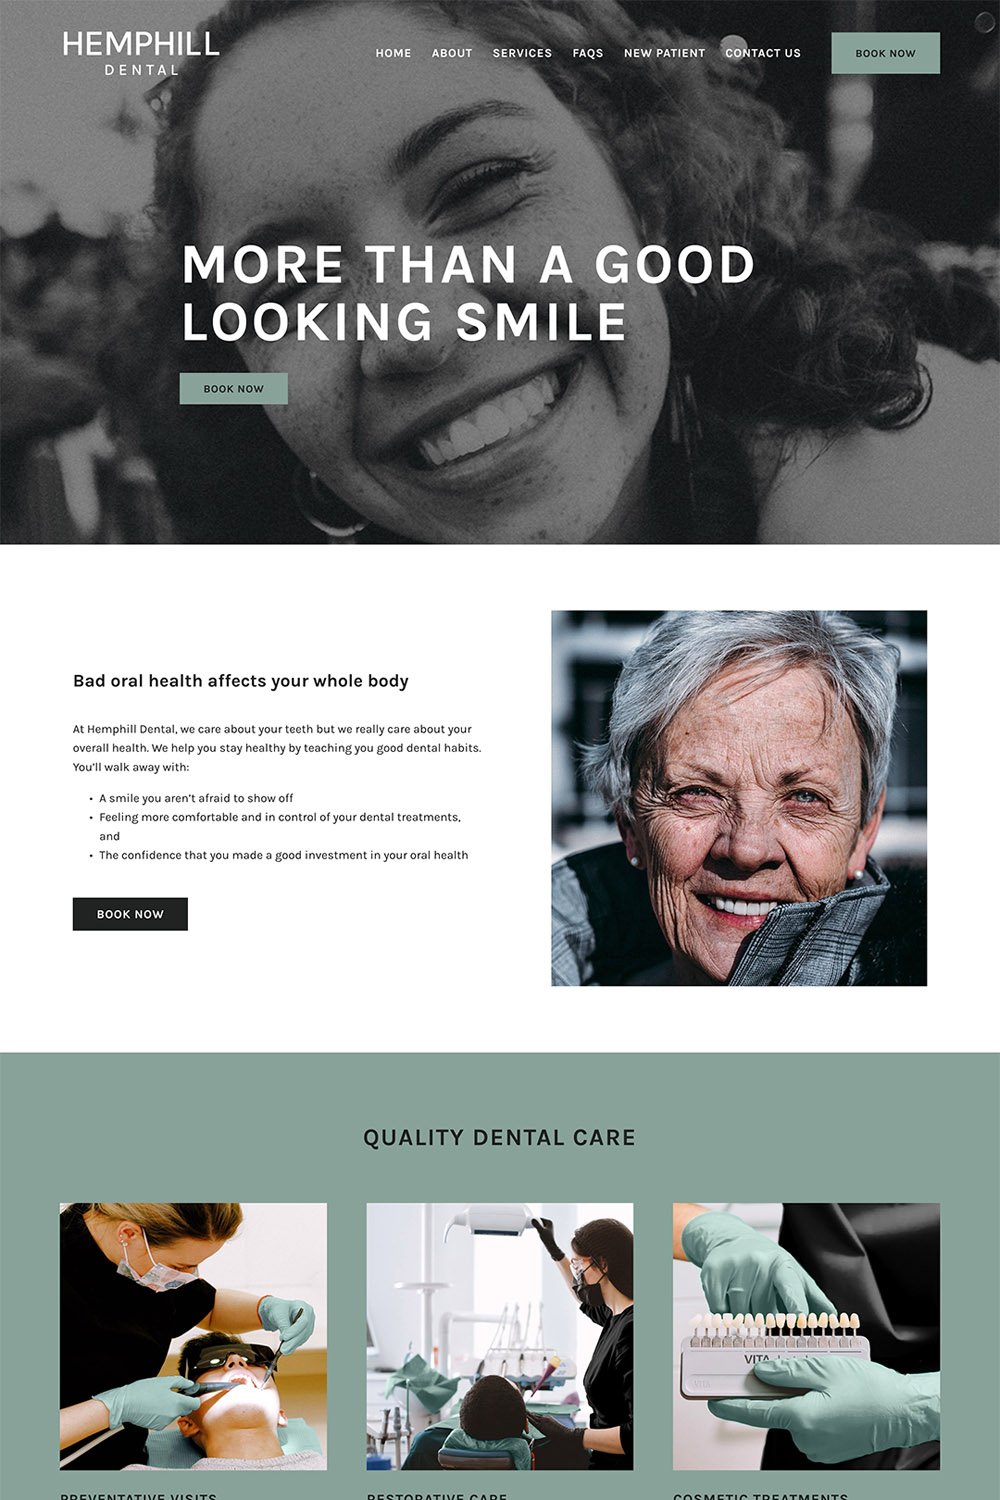 Hemphill Dental's website homepage layout